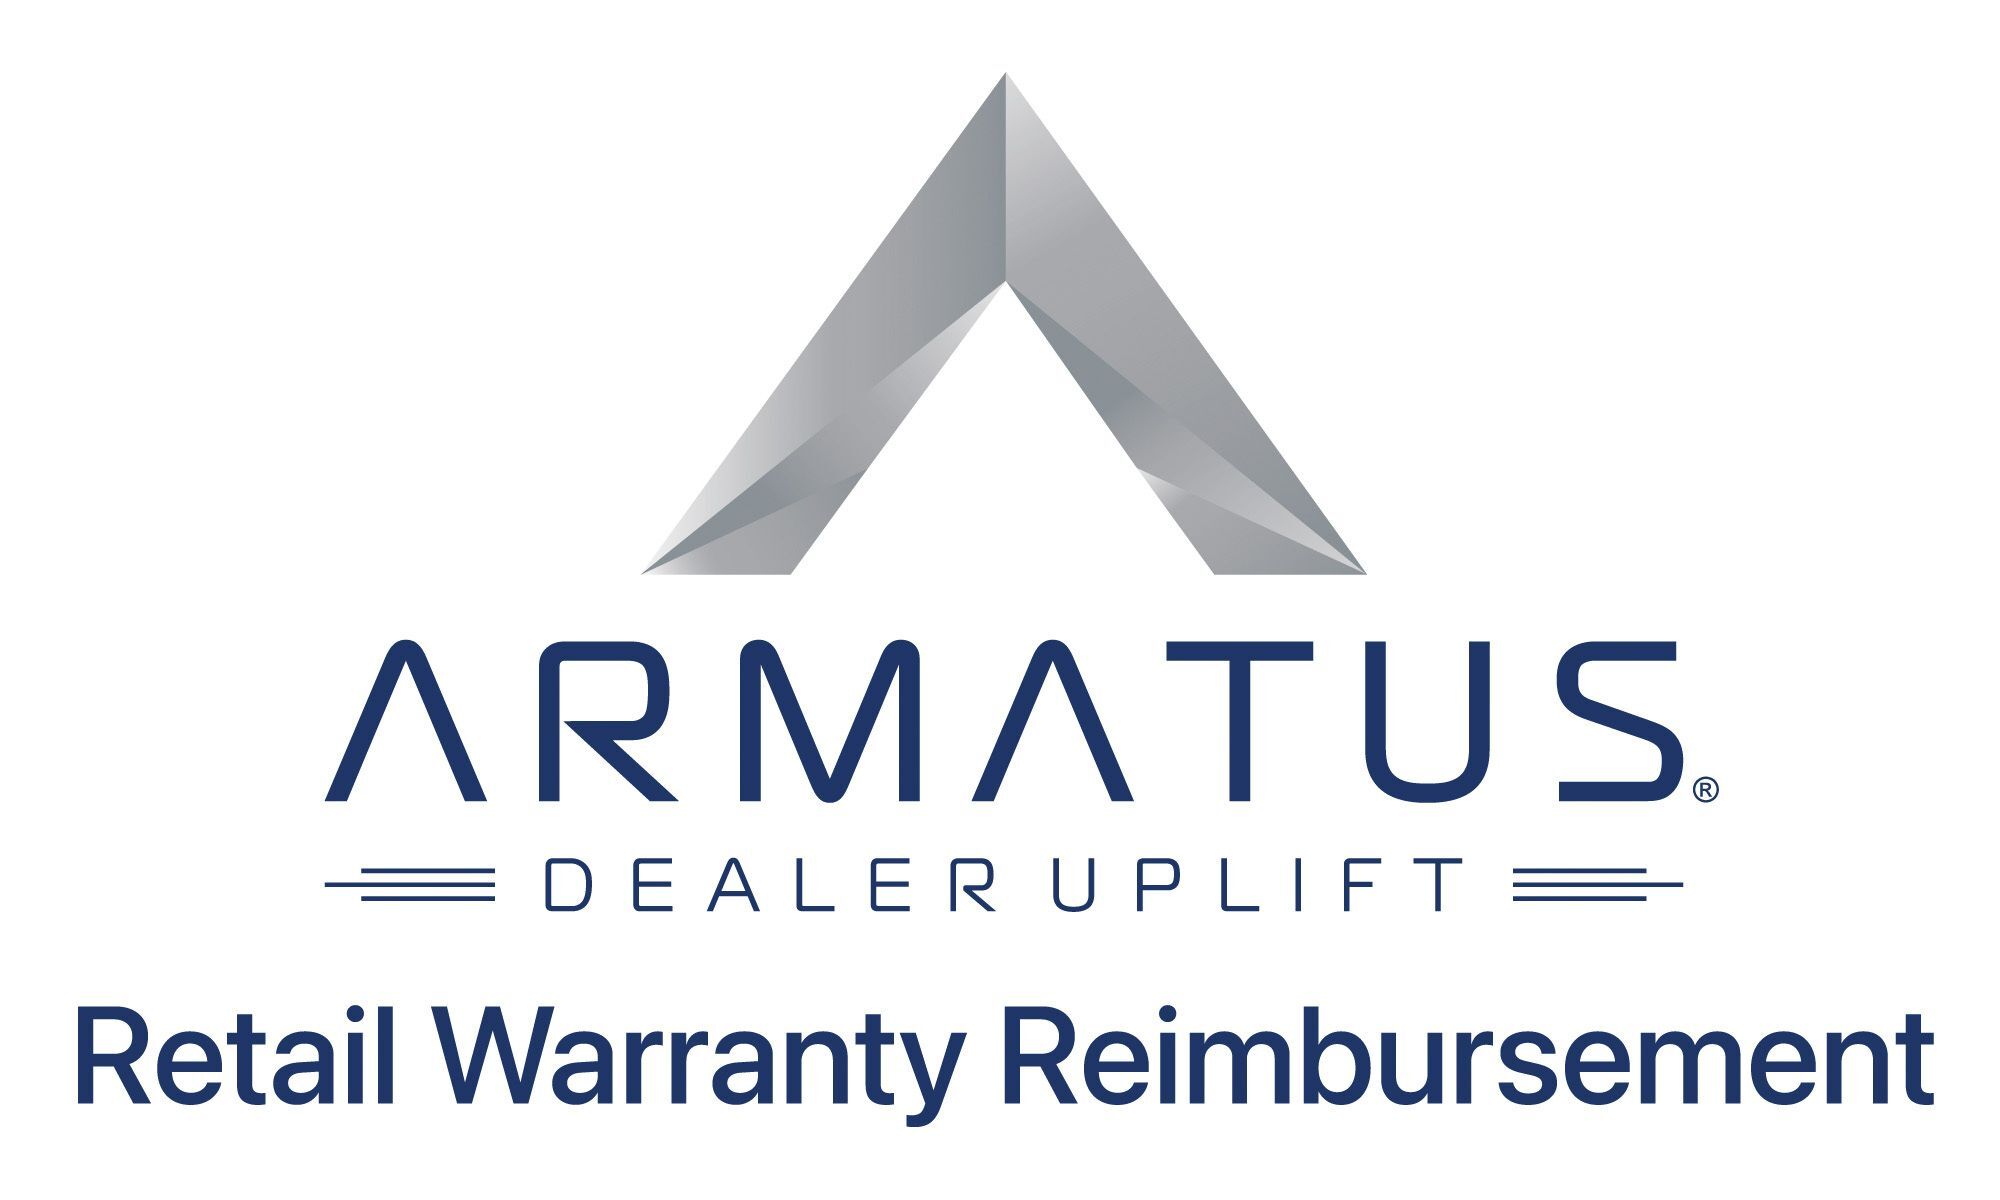 Retail Warranty Reimbursement